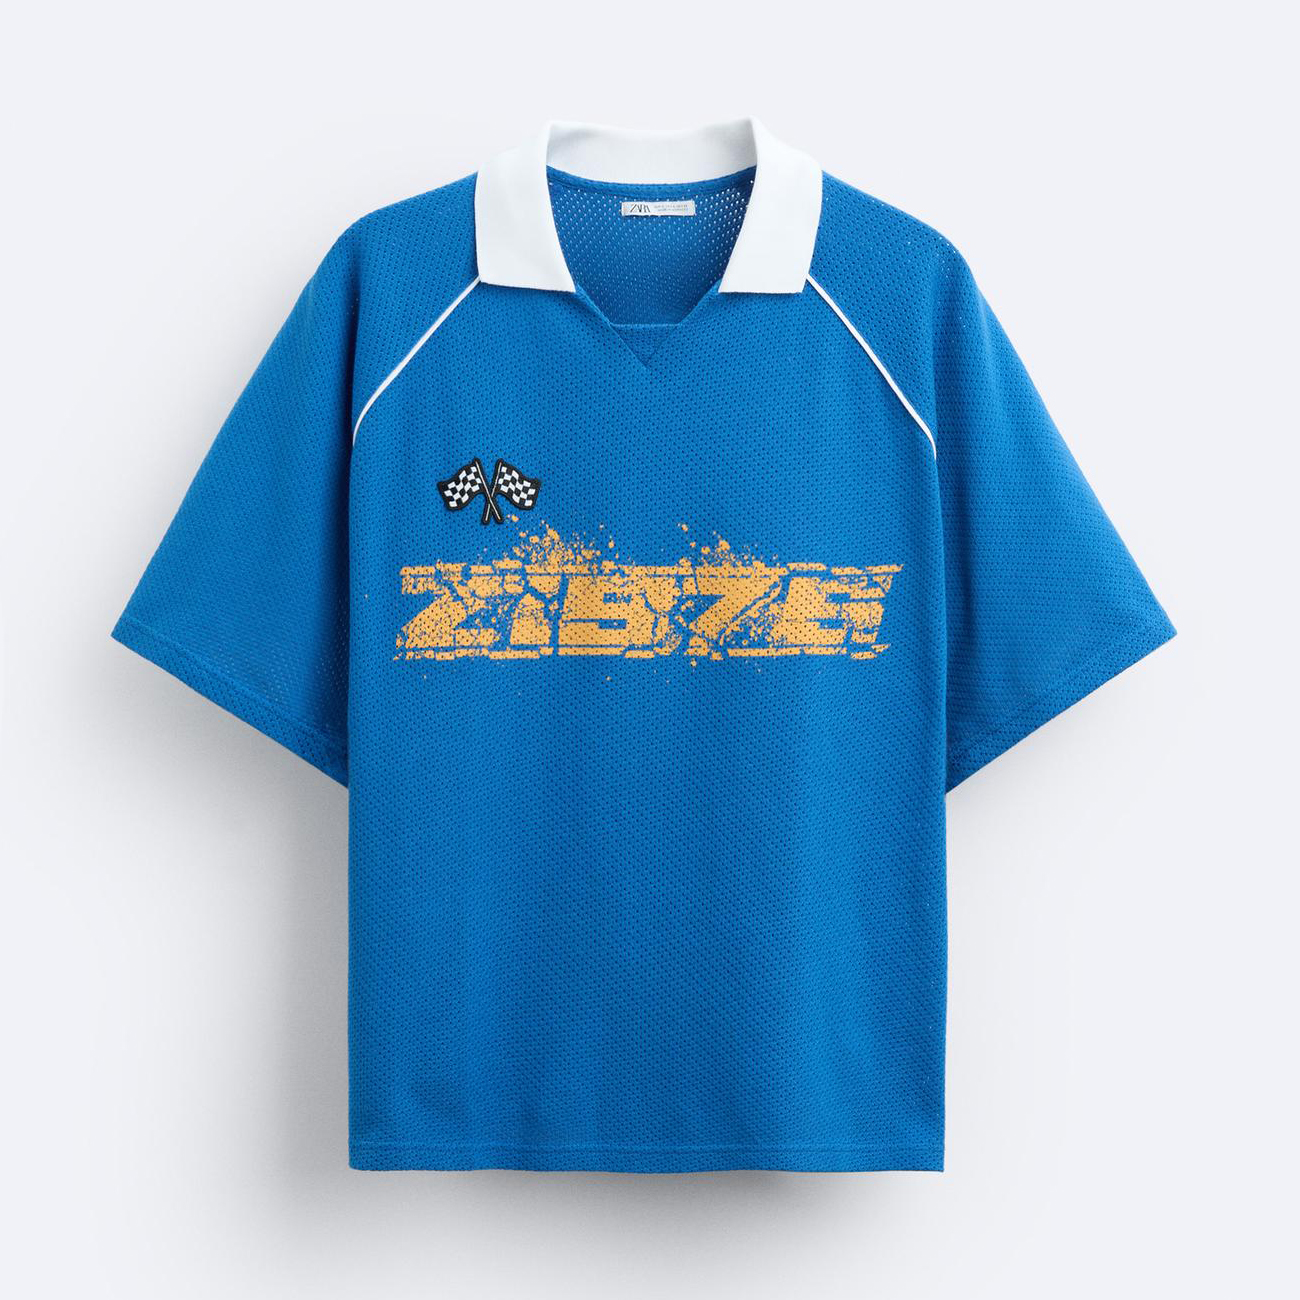 поло zara knit shirt бежевый Поло Zara Textured Knit, голубой